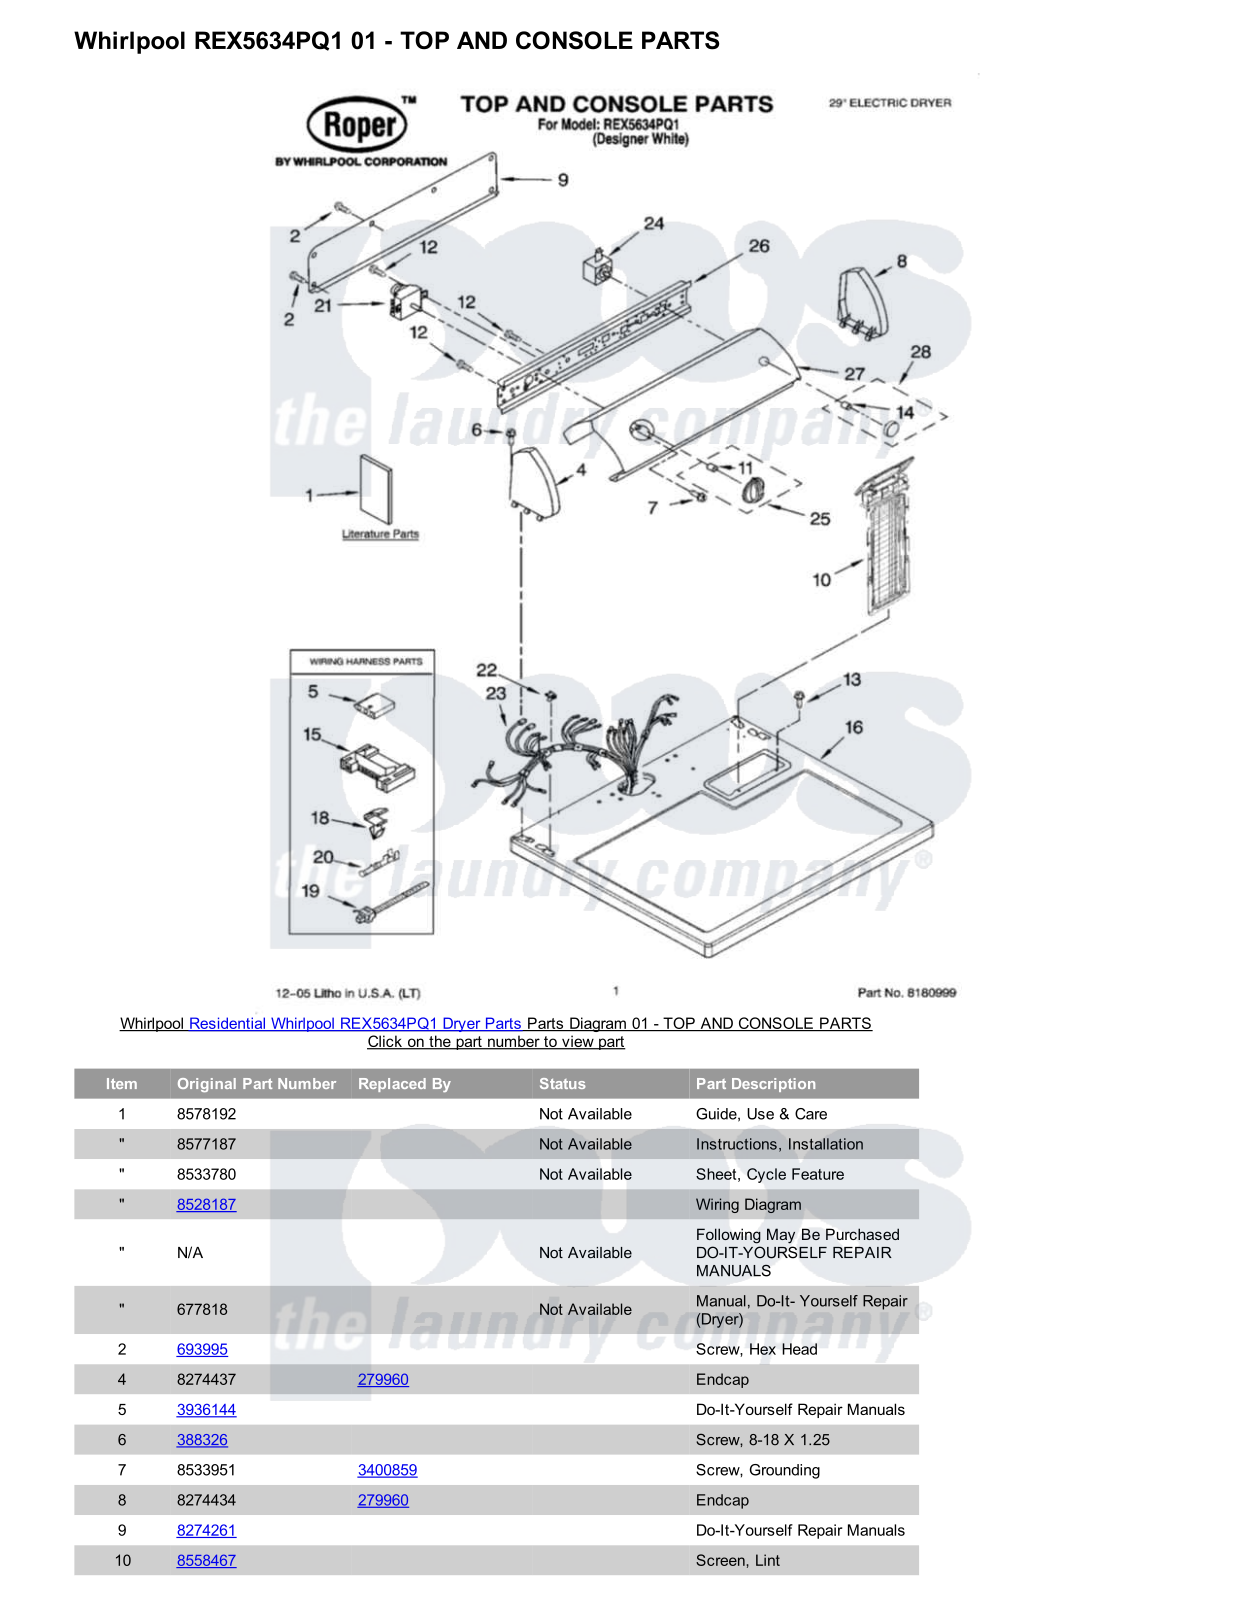 Whirlpool REX5634PQ1 Parts Diagram